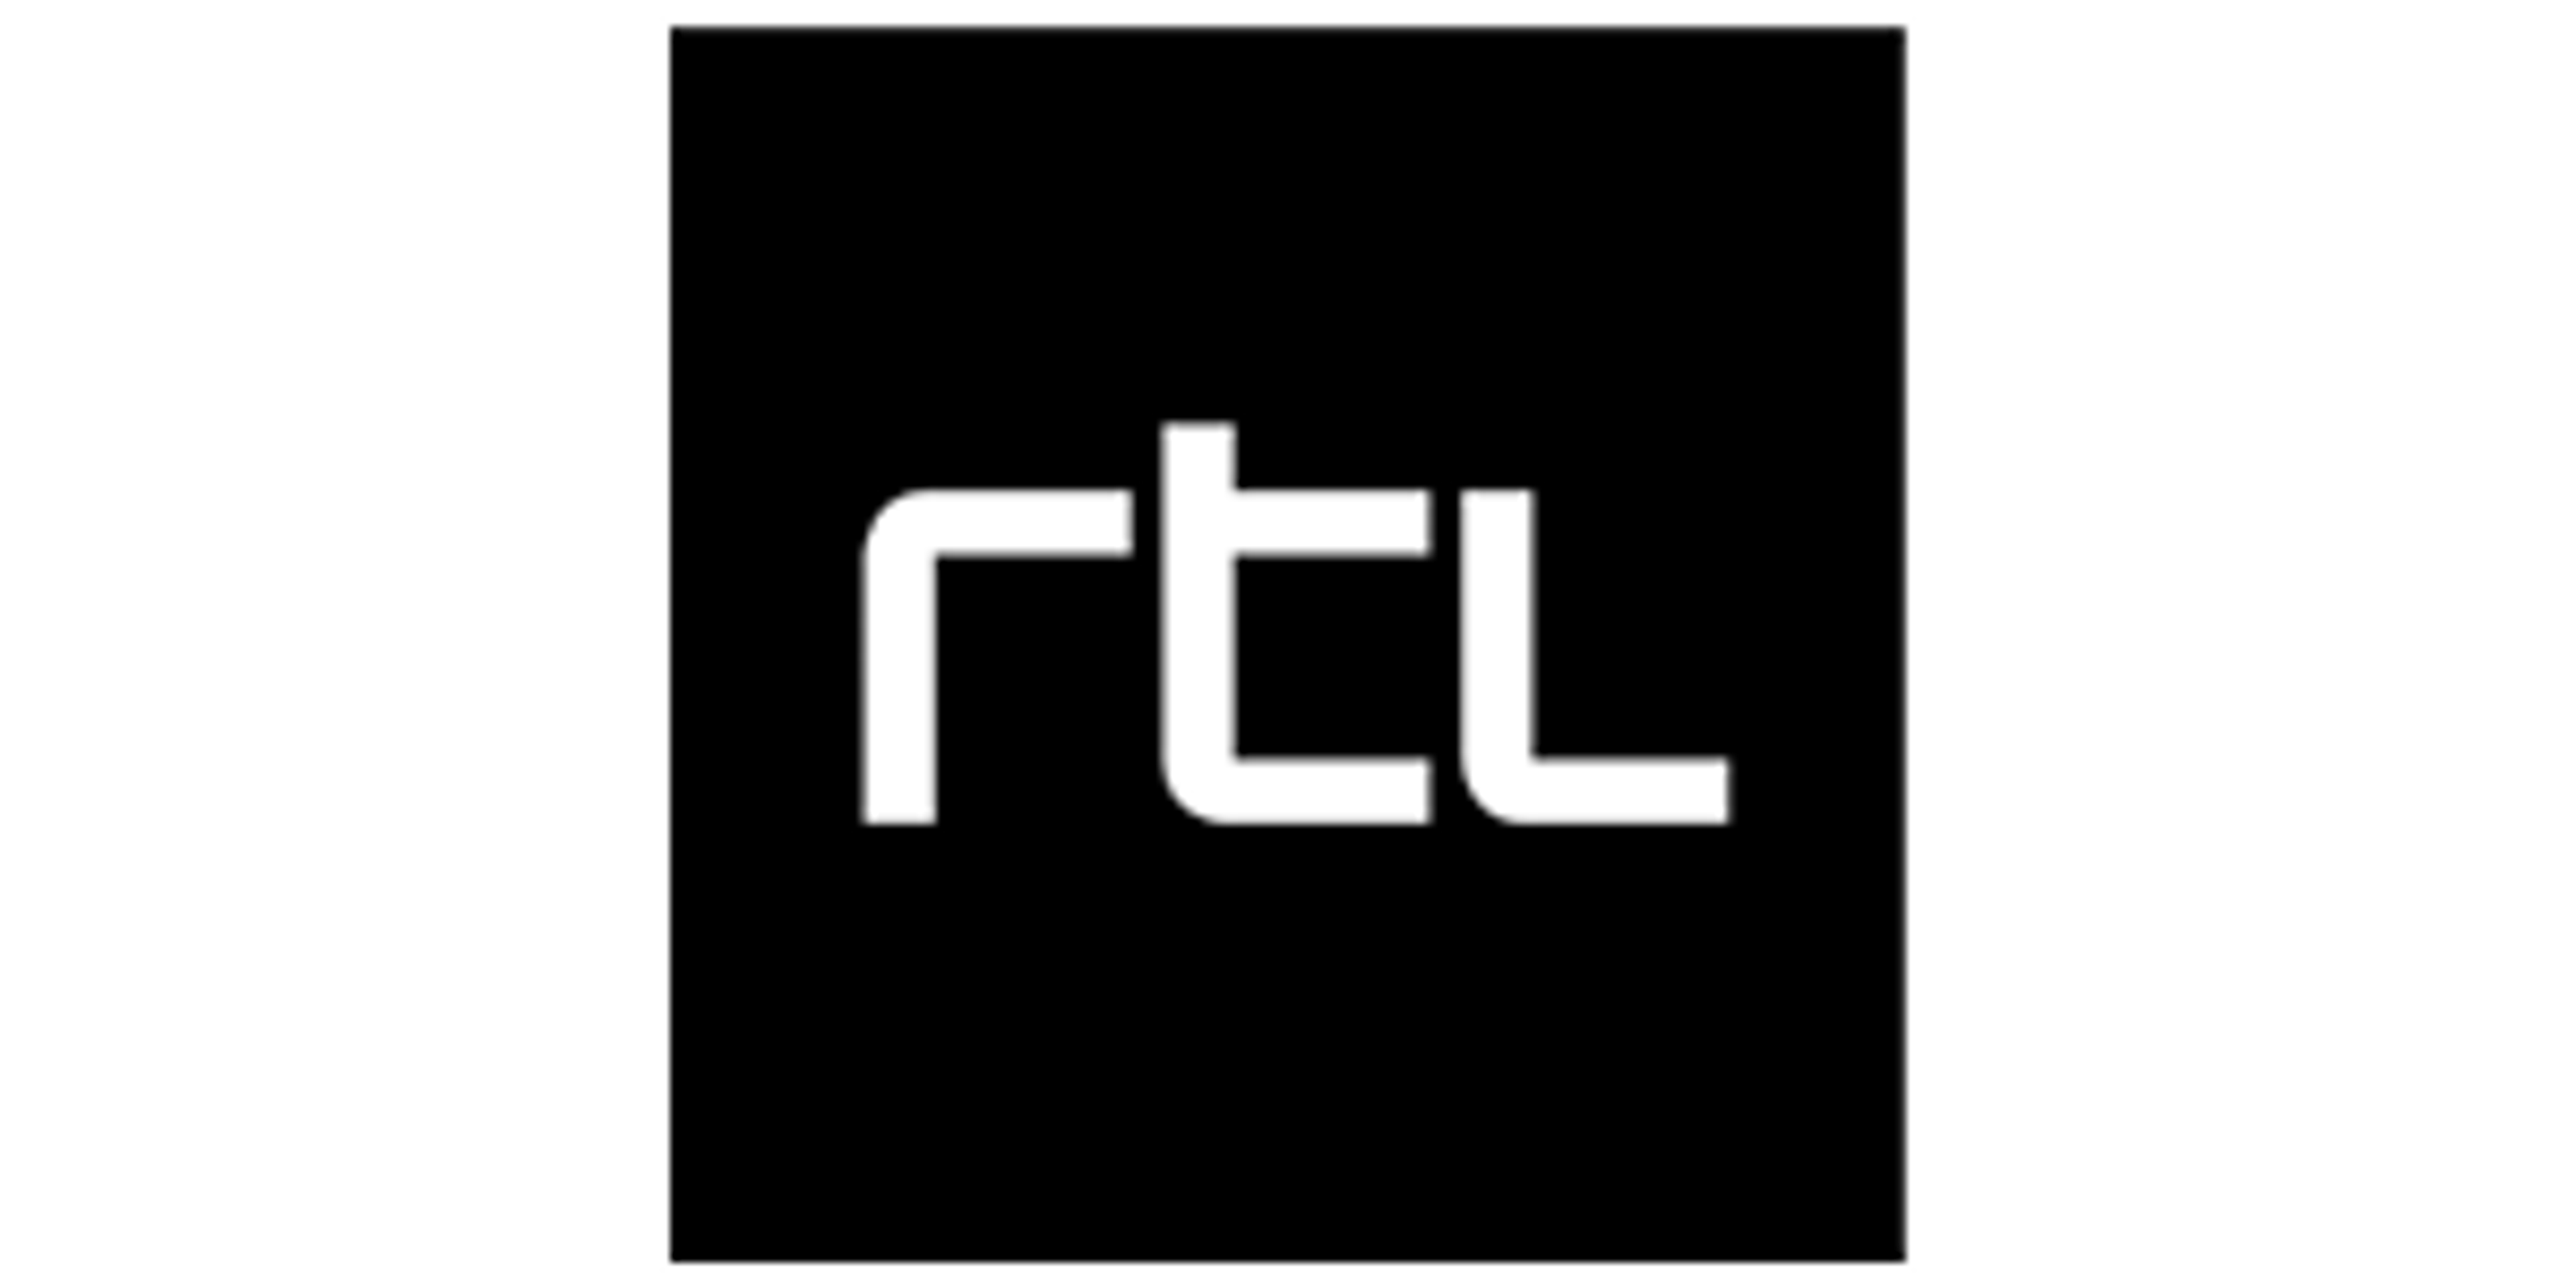 Update RTL-programmering omtrent corona virus